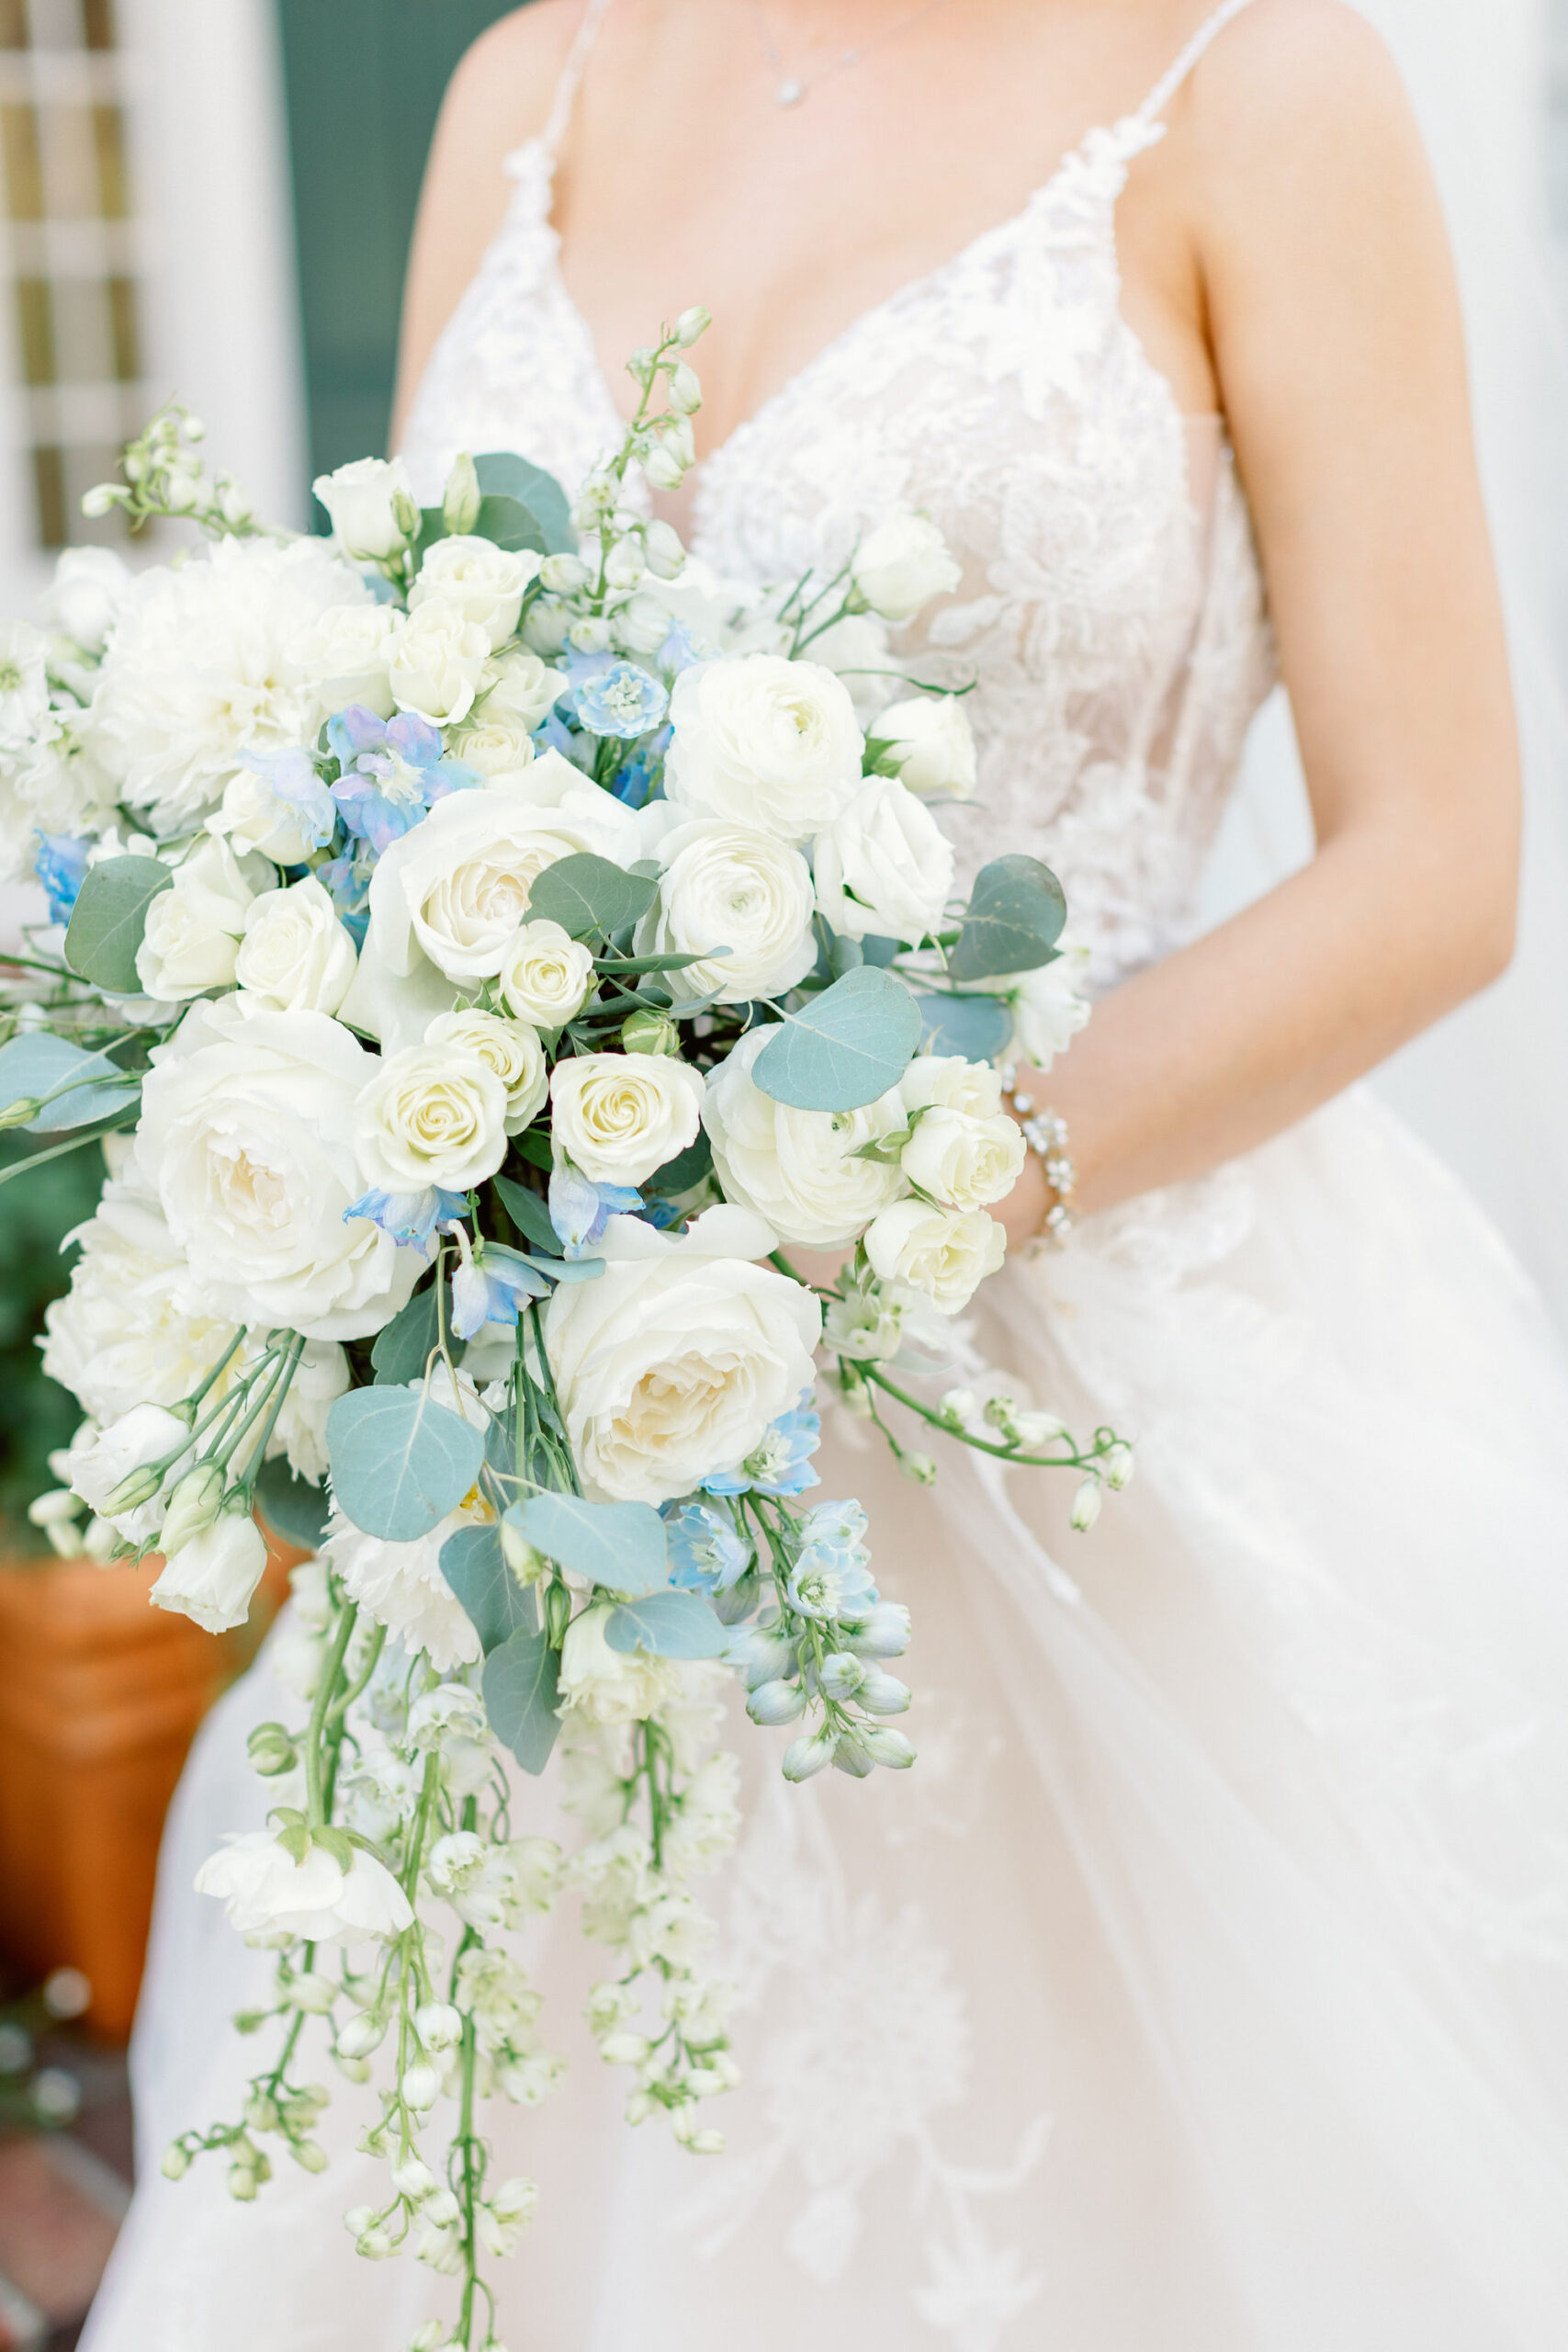 White Spray Roses, White Garden Rose, Eucalyptus, and Blue Delphinium Bridal Wedding Bouquet | Sarasota Florist Botanica Design Studio